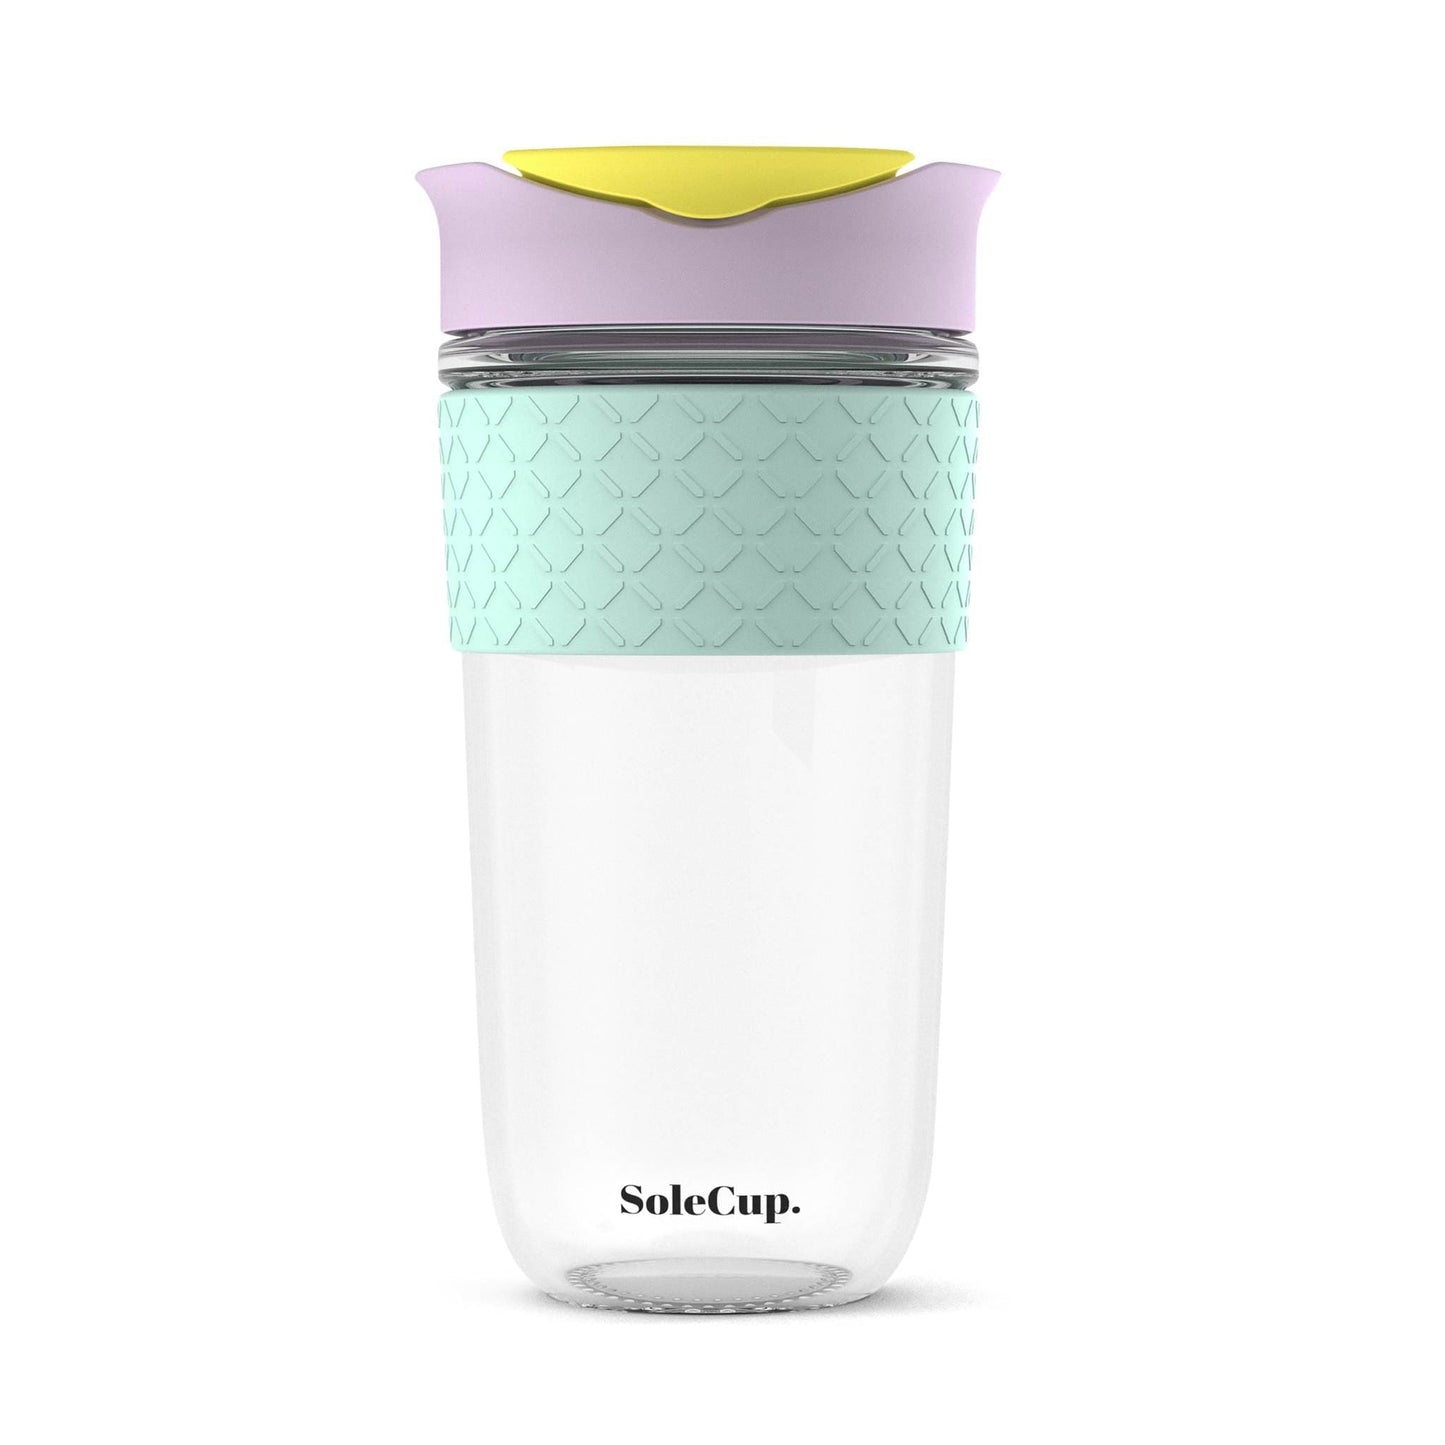 Faerly SoleCup Reusable Glass Travel Mug for Coffee & Loose Tea - 18oz/530ml - Ice-cream